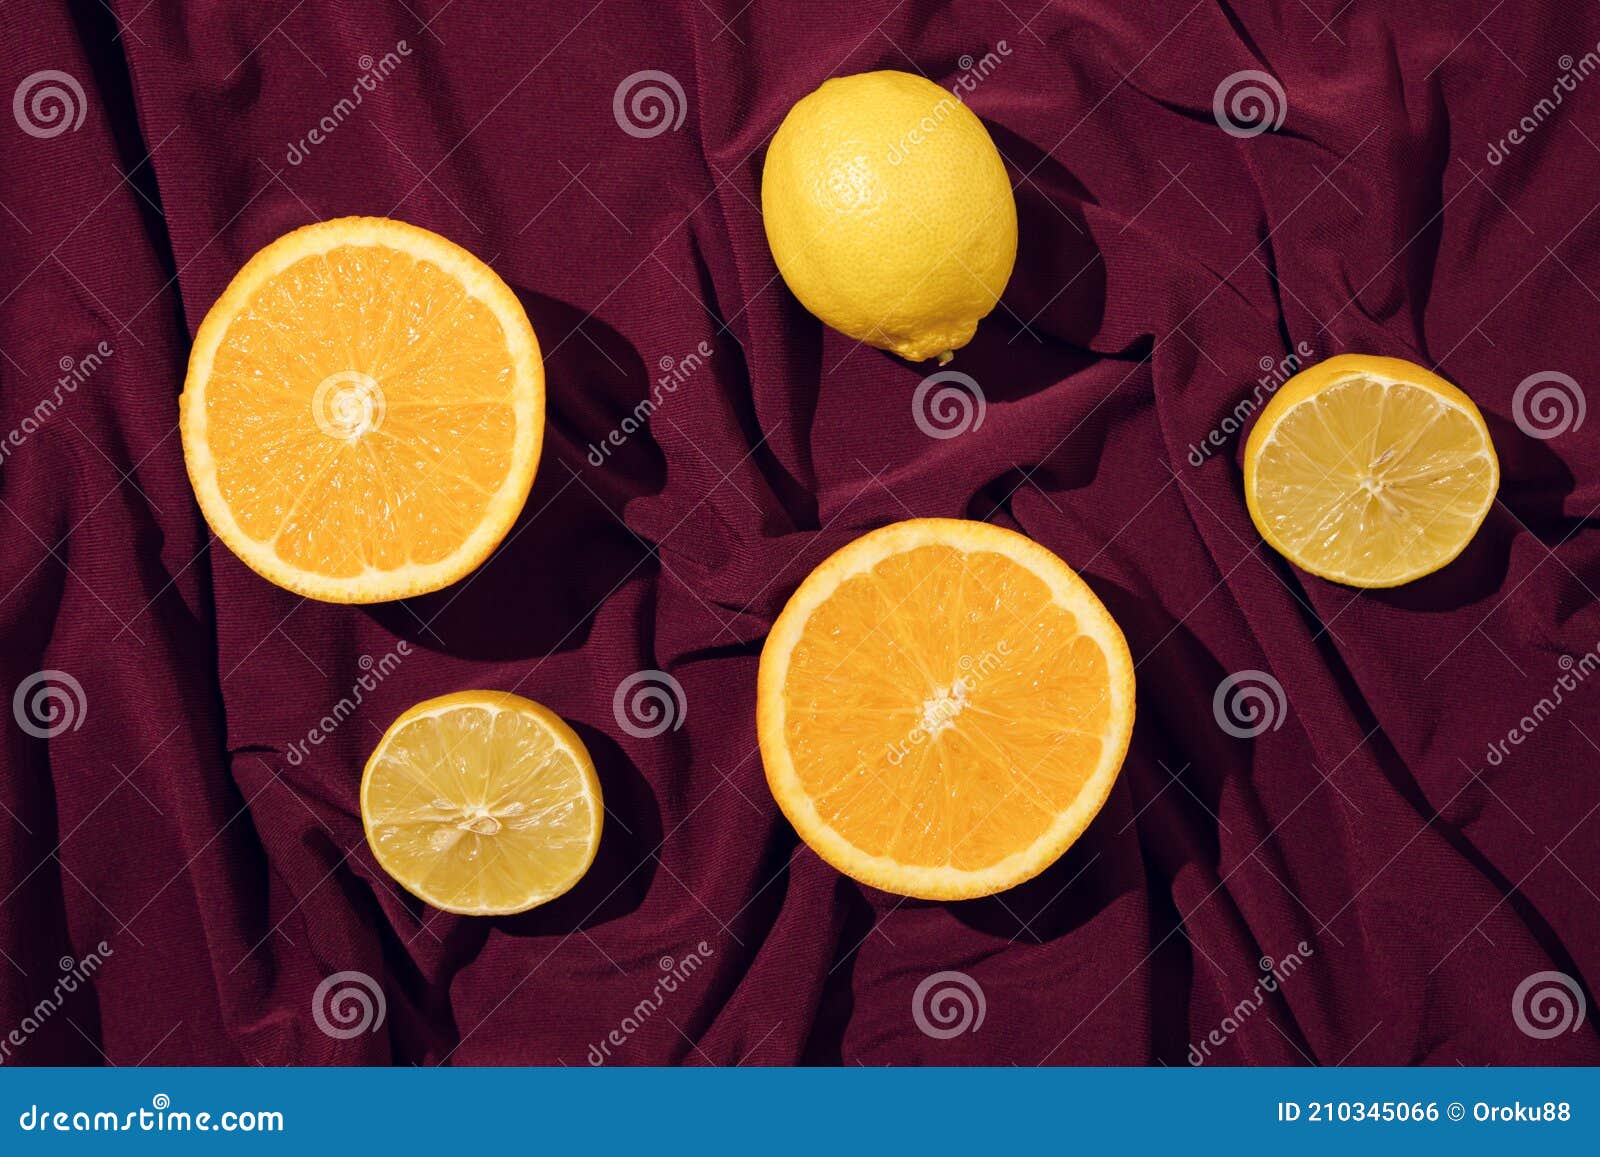 minimal concept of orange slice and lemon on a beautiful dark red silk or saten background. summer fresh fruit idea.